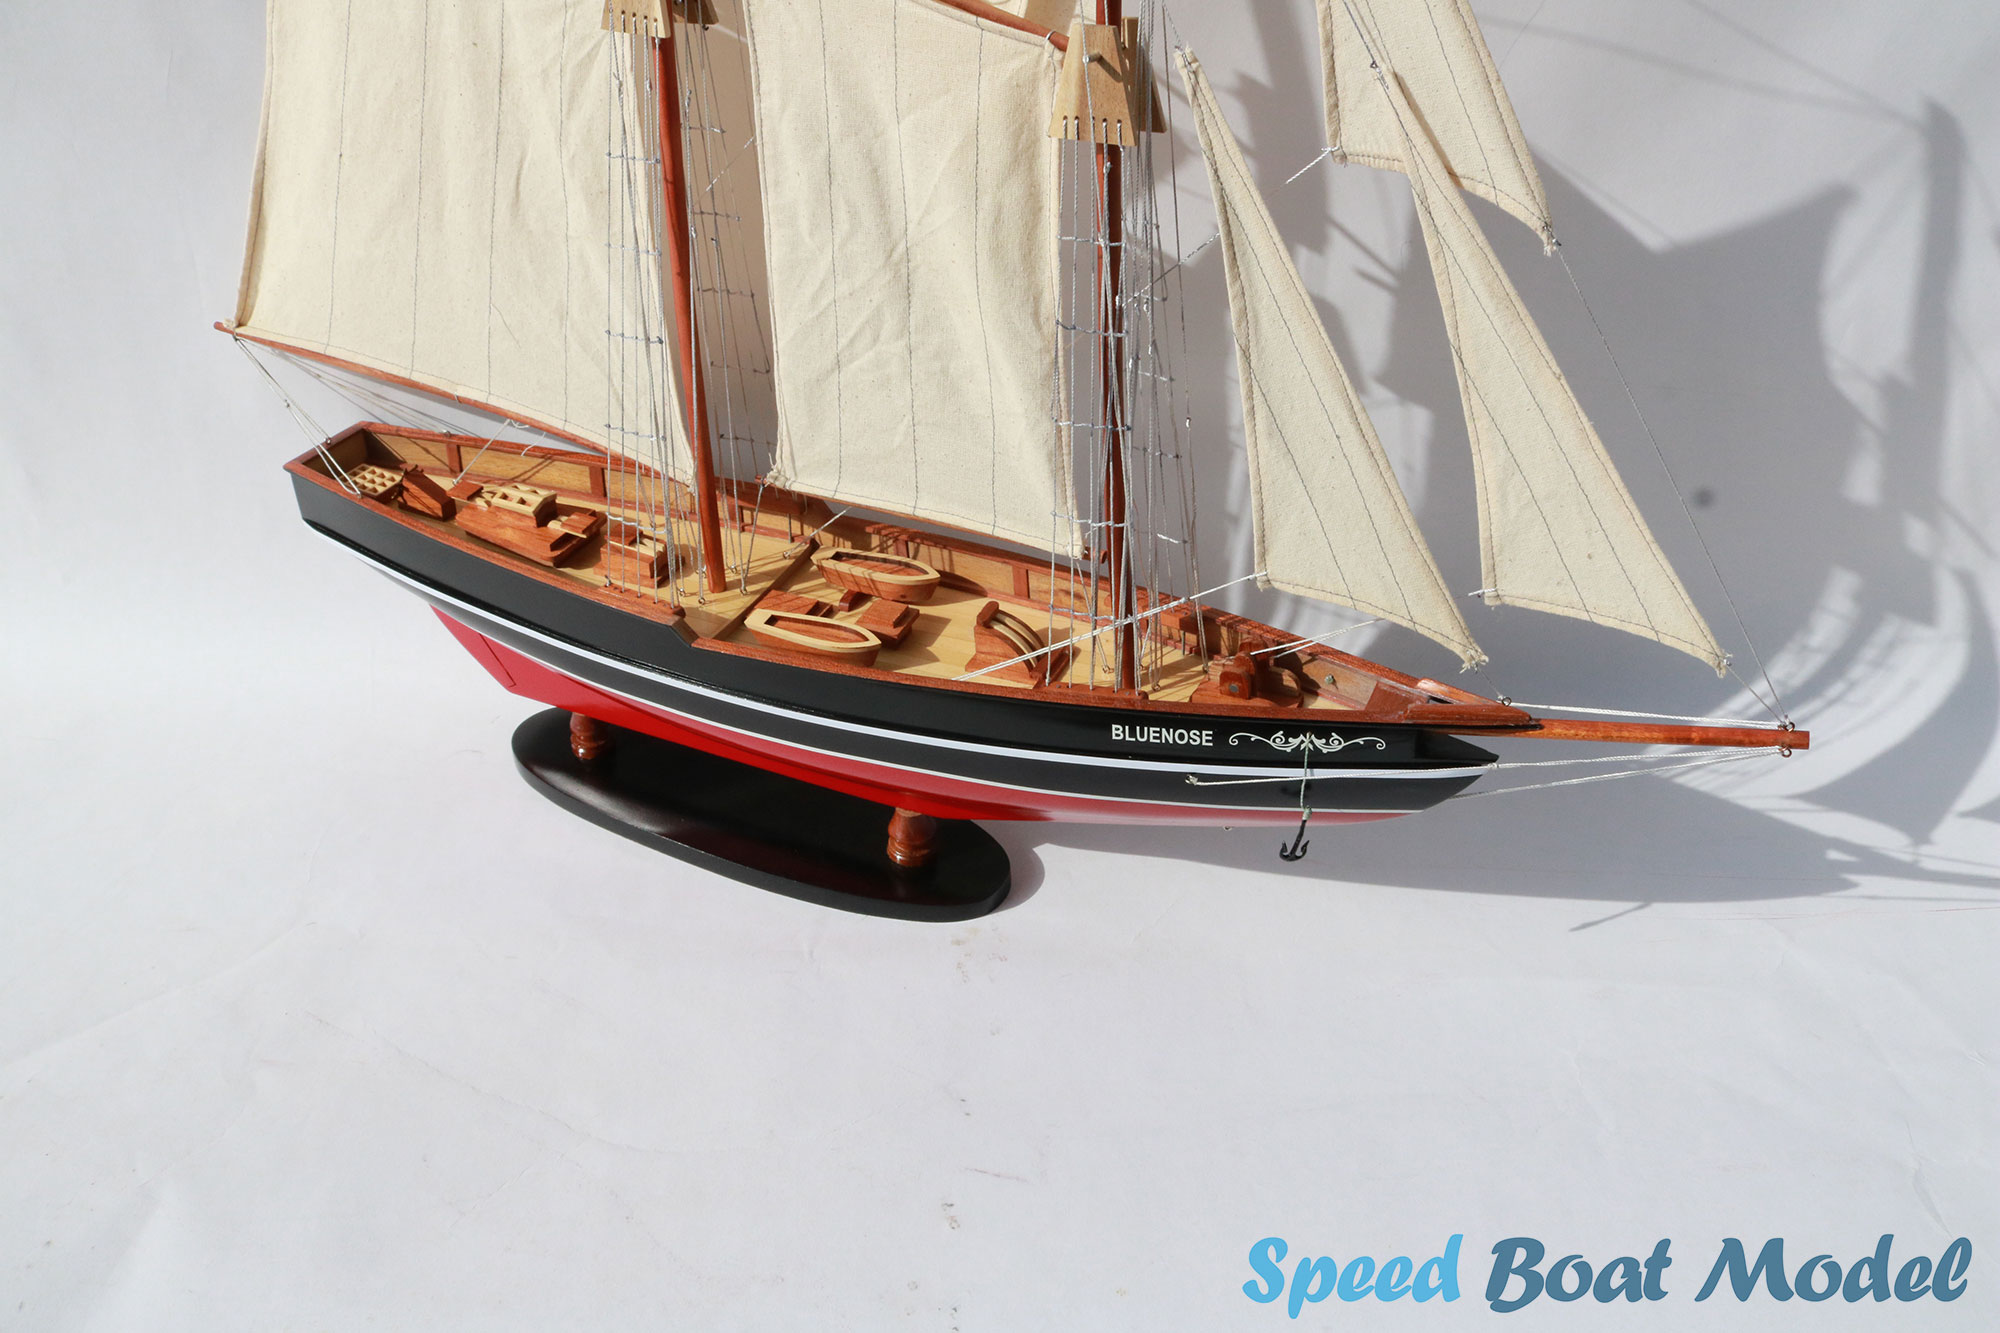 Bluenose Painted Sailing Boat Model 31.4"